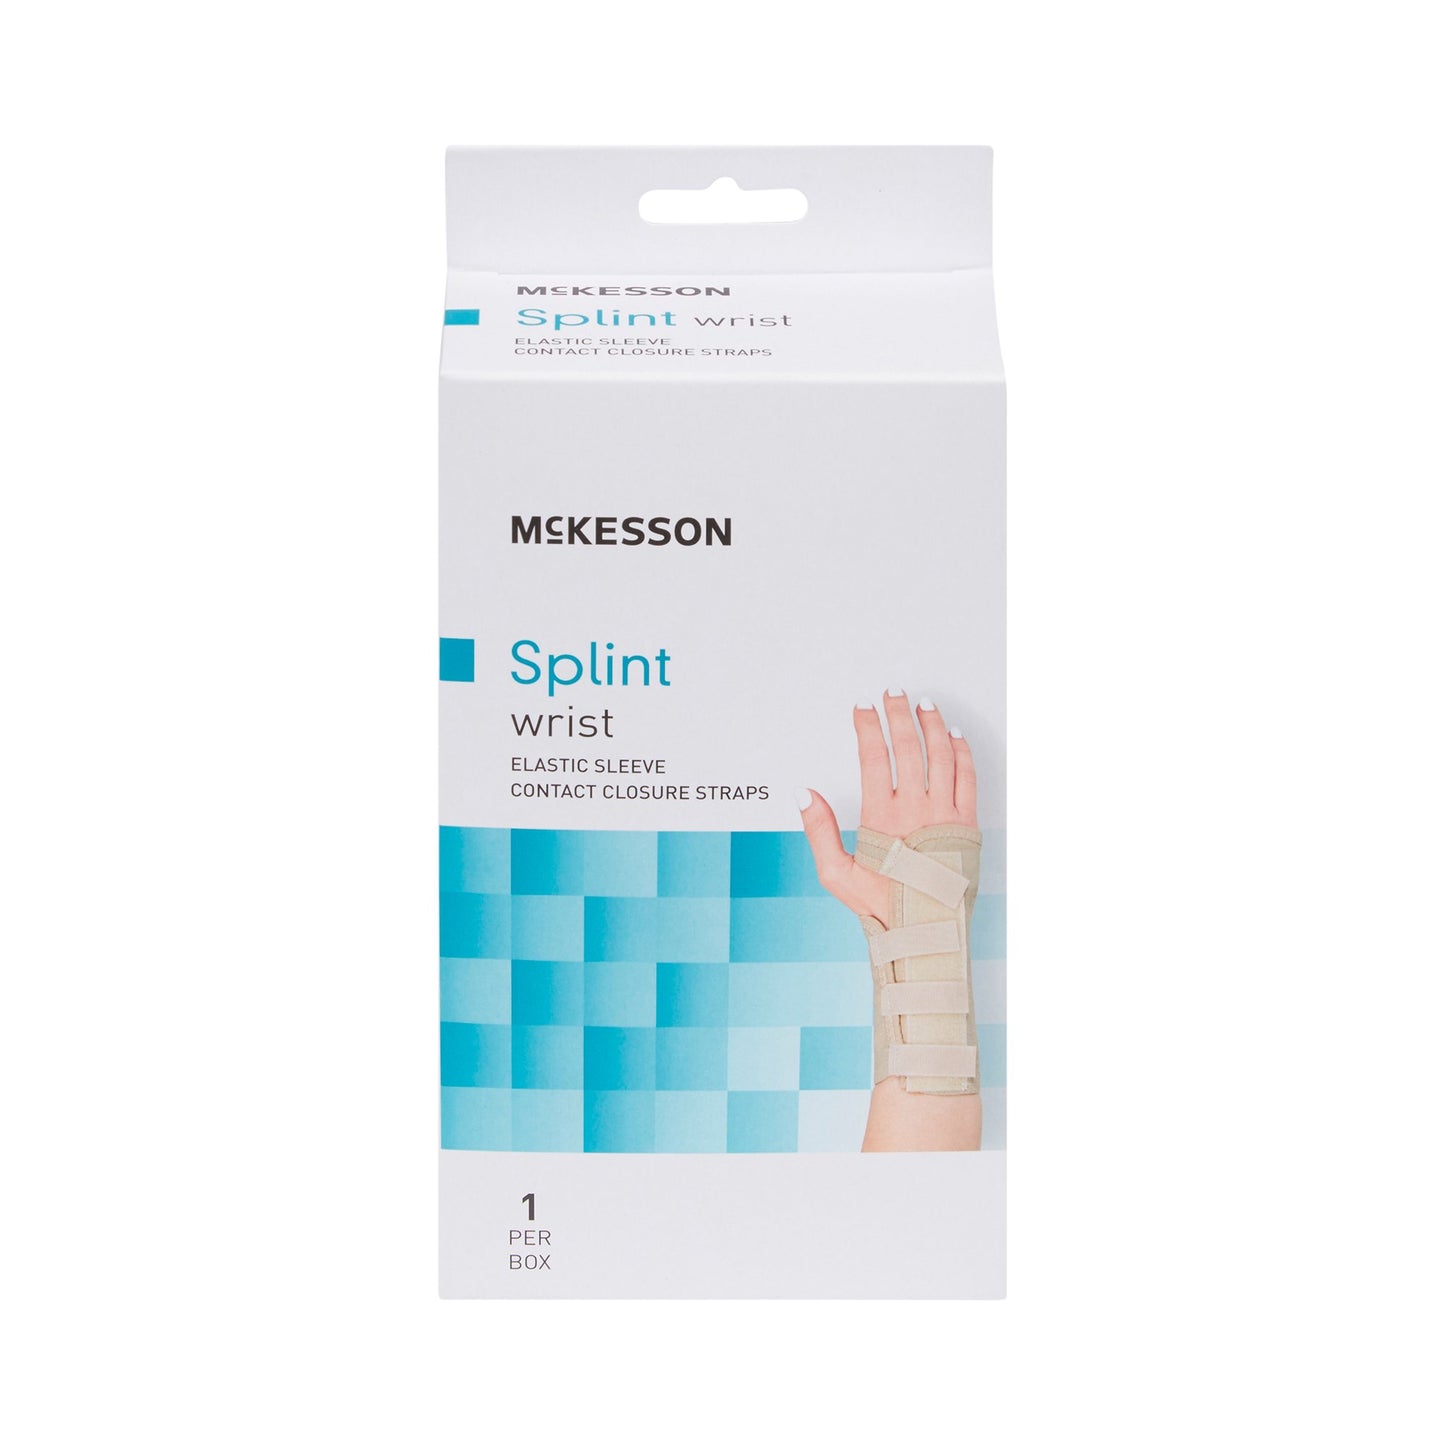 McKesson Right Wrist Splint, Small